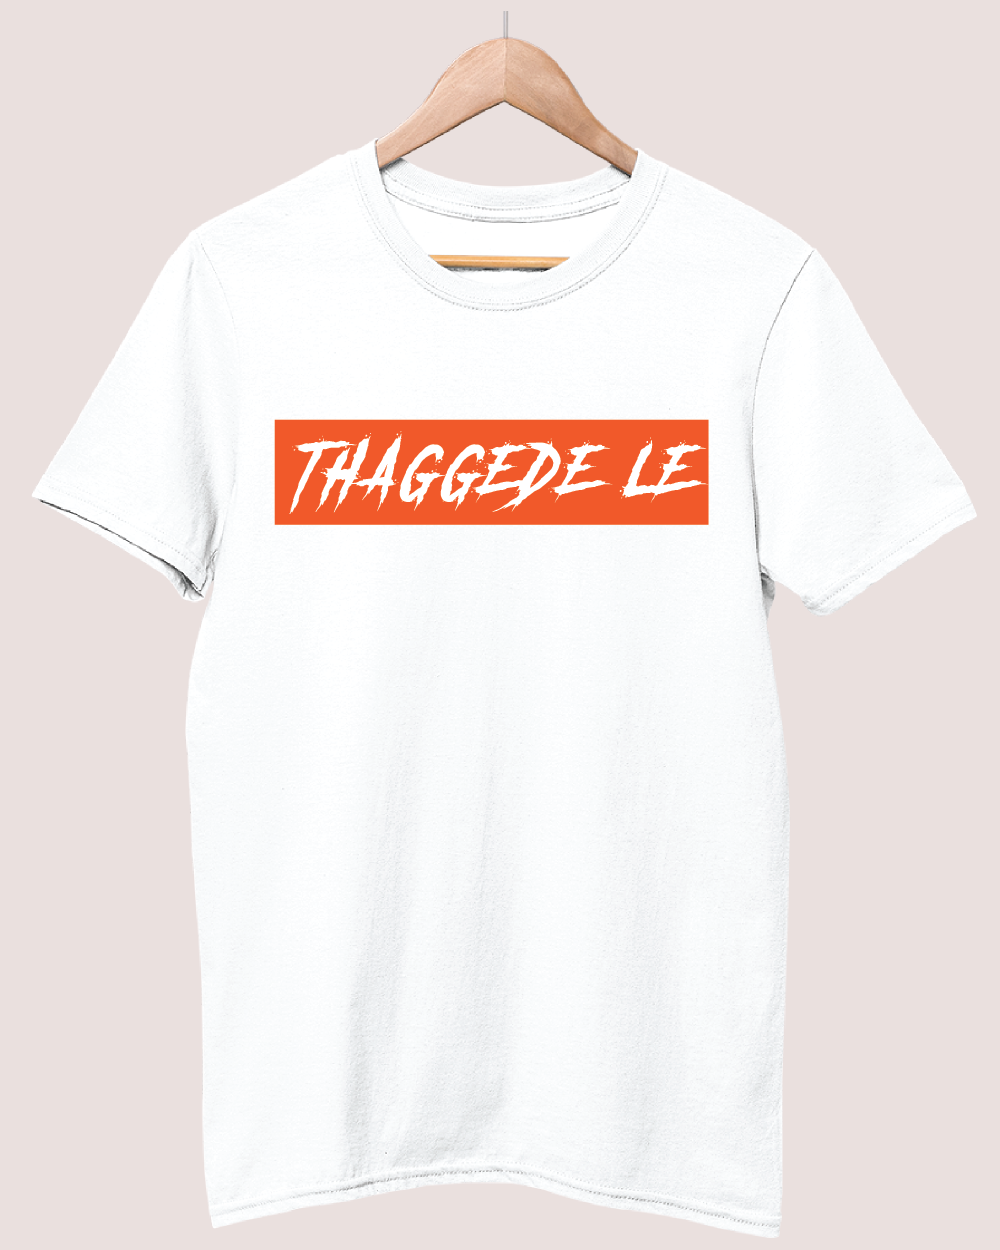 Thaggede Le T-shirt